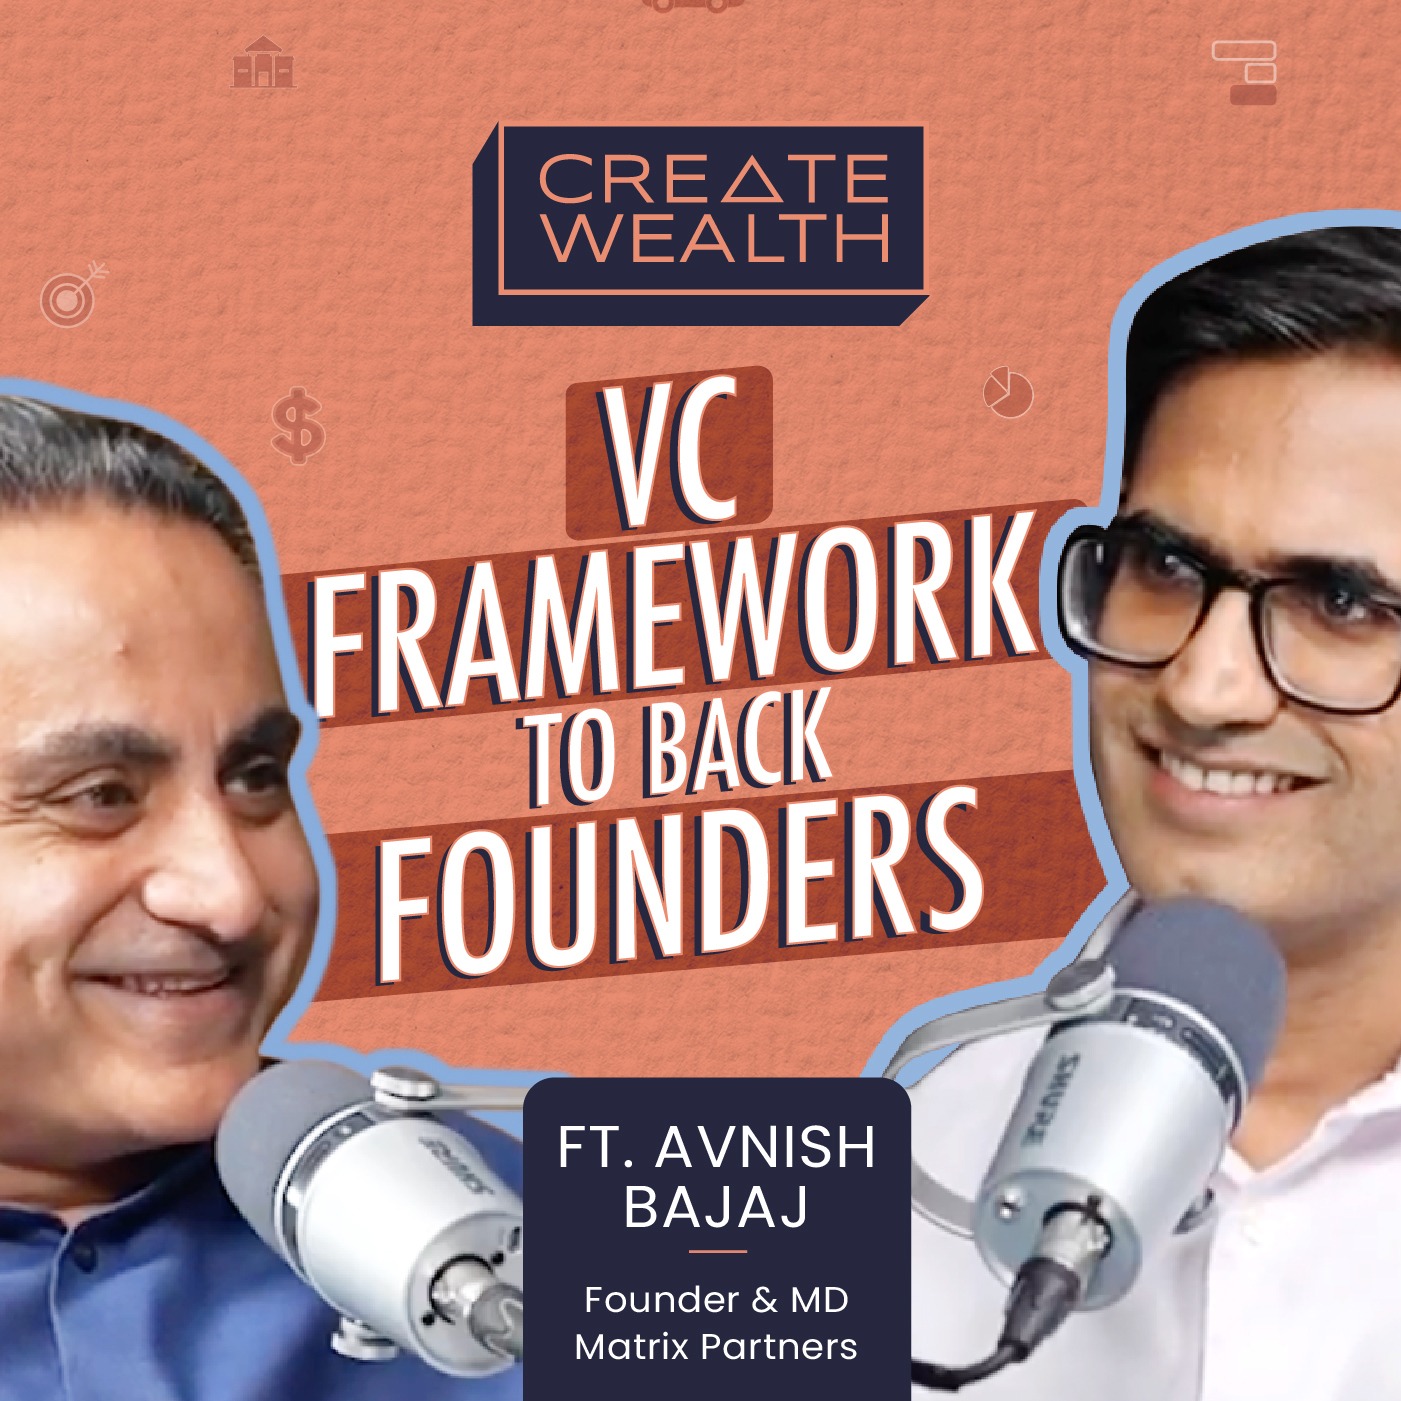 Journey of India’s leading Venture Capitalist Ft. AVNISH BAJAJ, Founder - Matrix Partners India